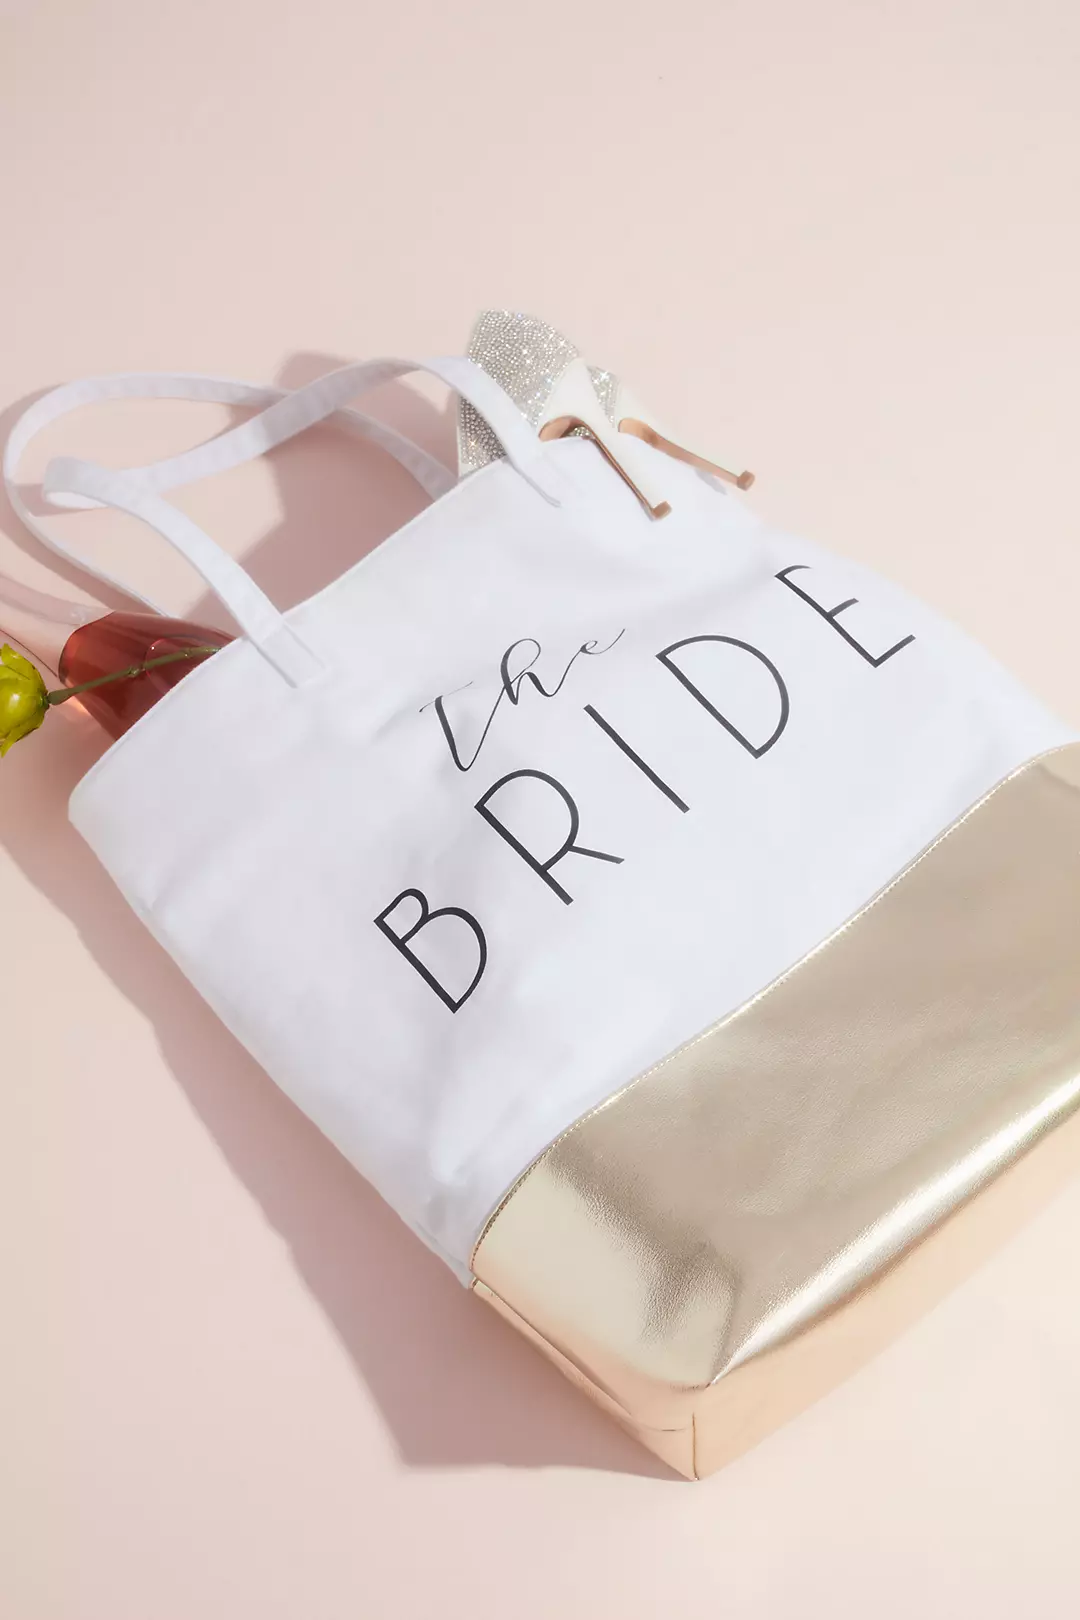  Sweetude 20 Pcs Bride Canvas Tote Bags Bridal Bags